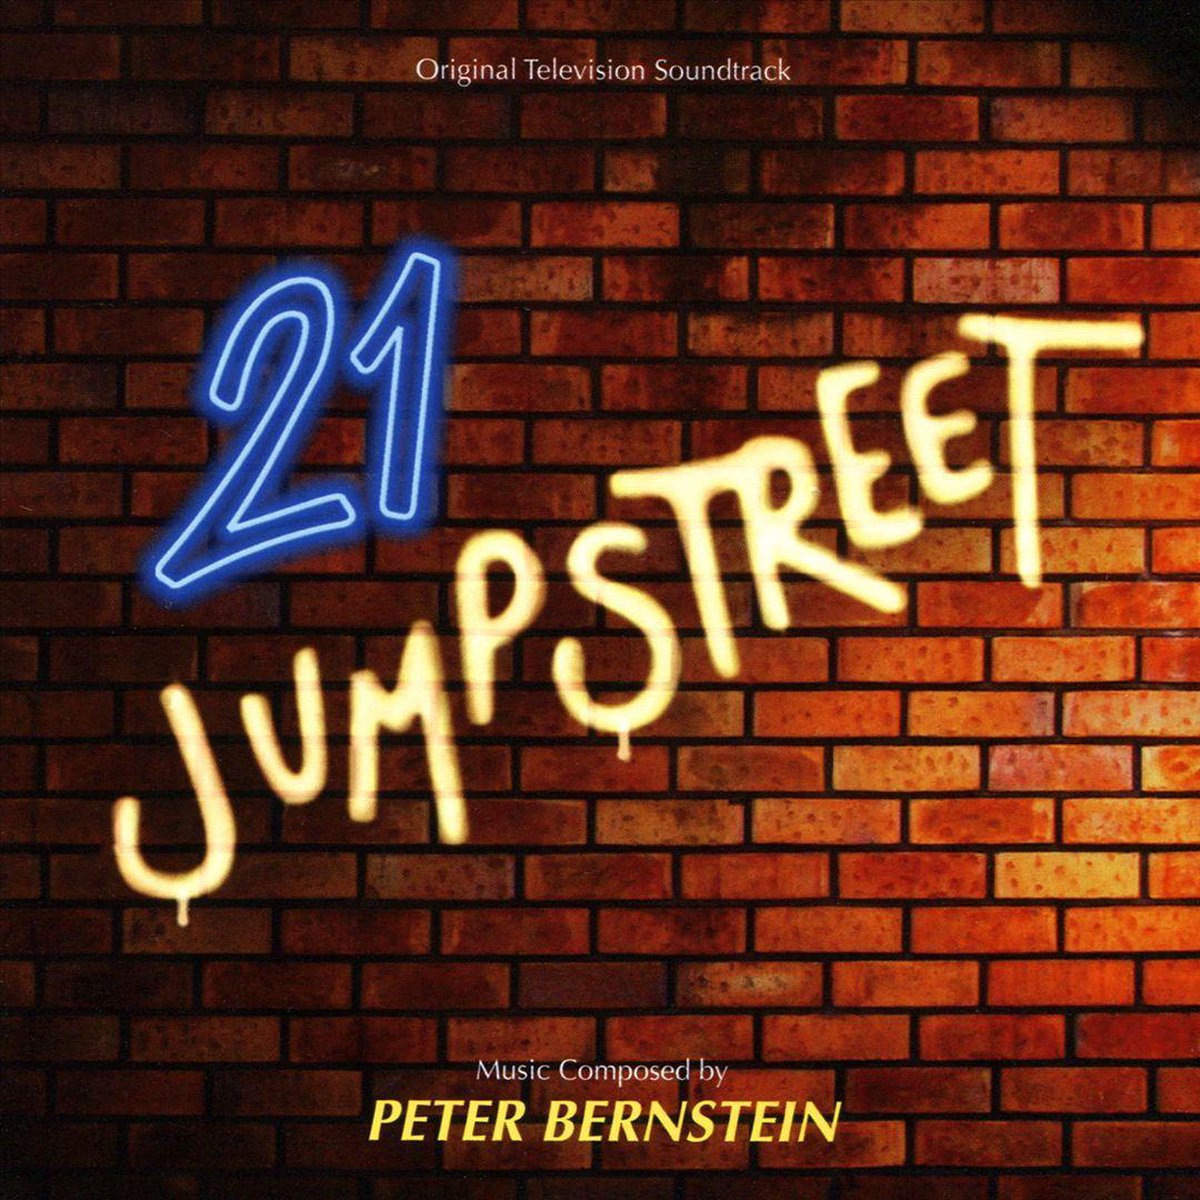 21 Jumpstreet [Original Television Soundtrack]